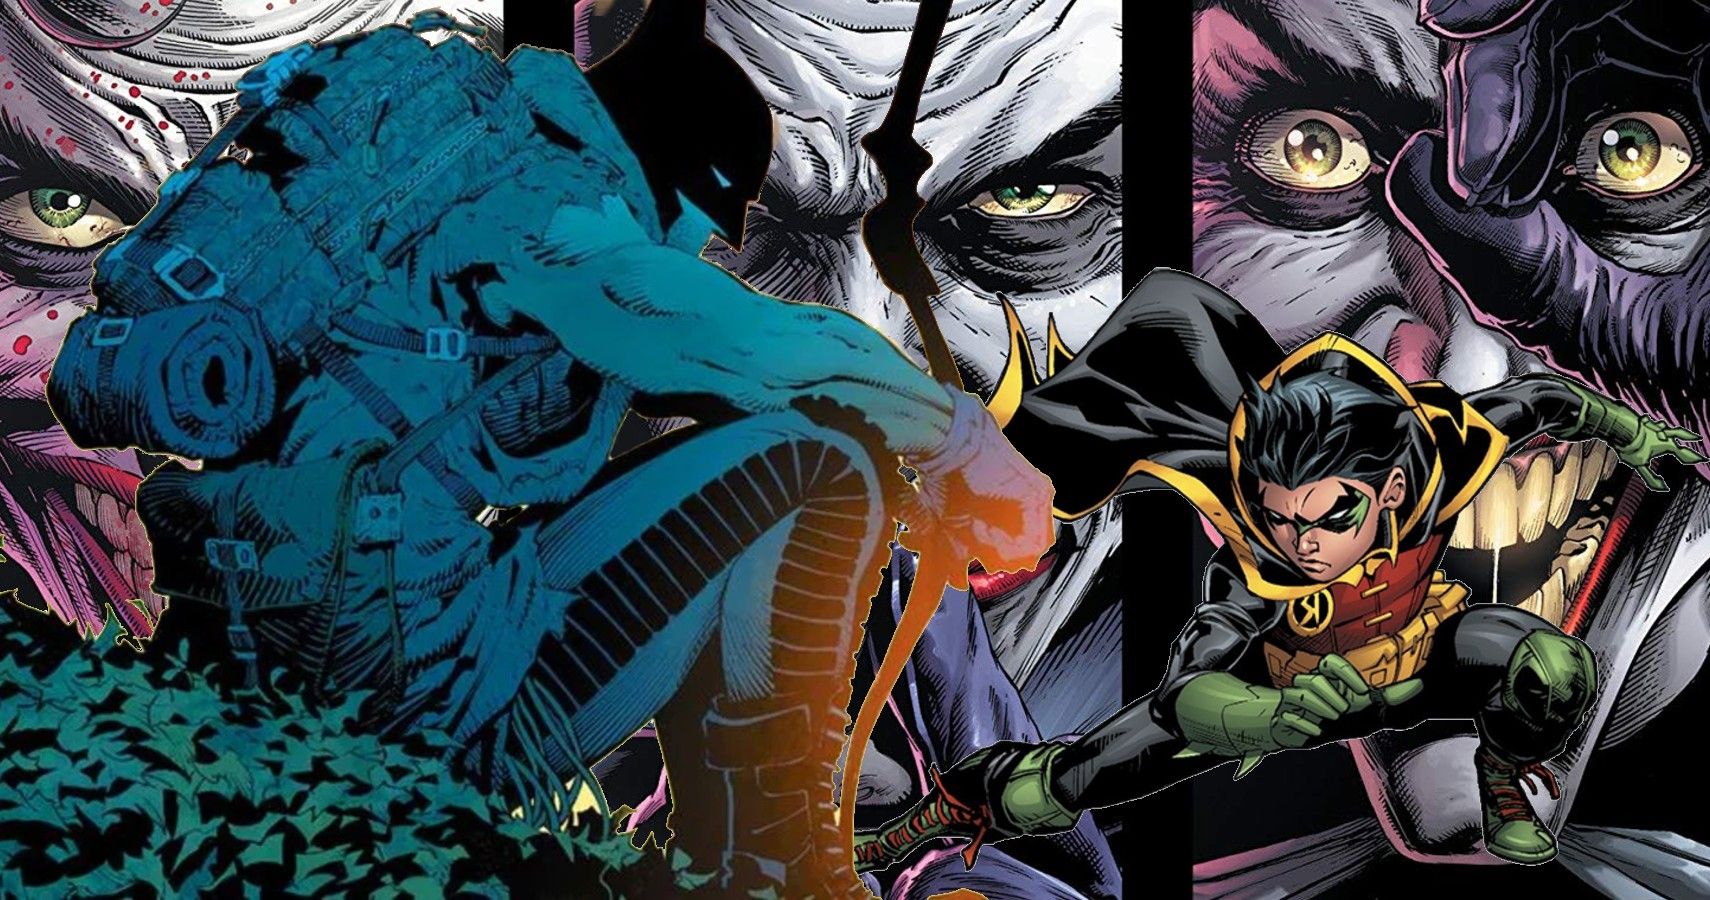 Batman, Robin, and the Three Jokers